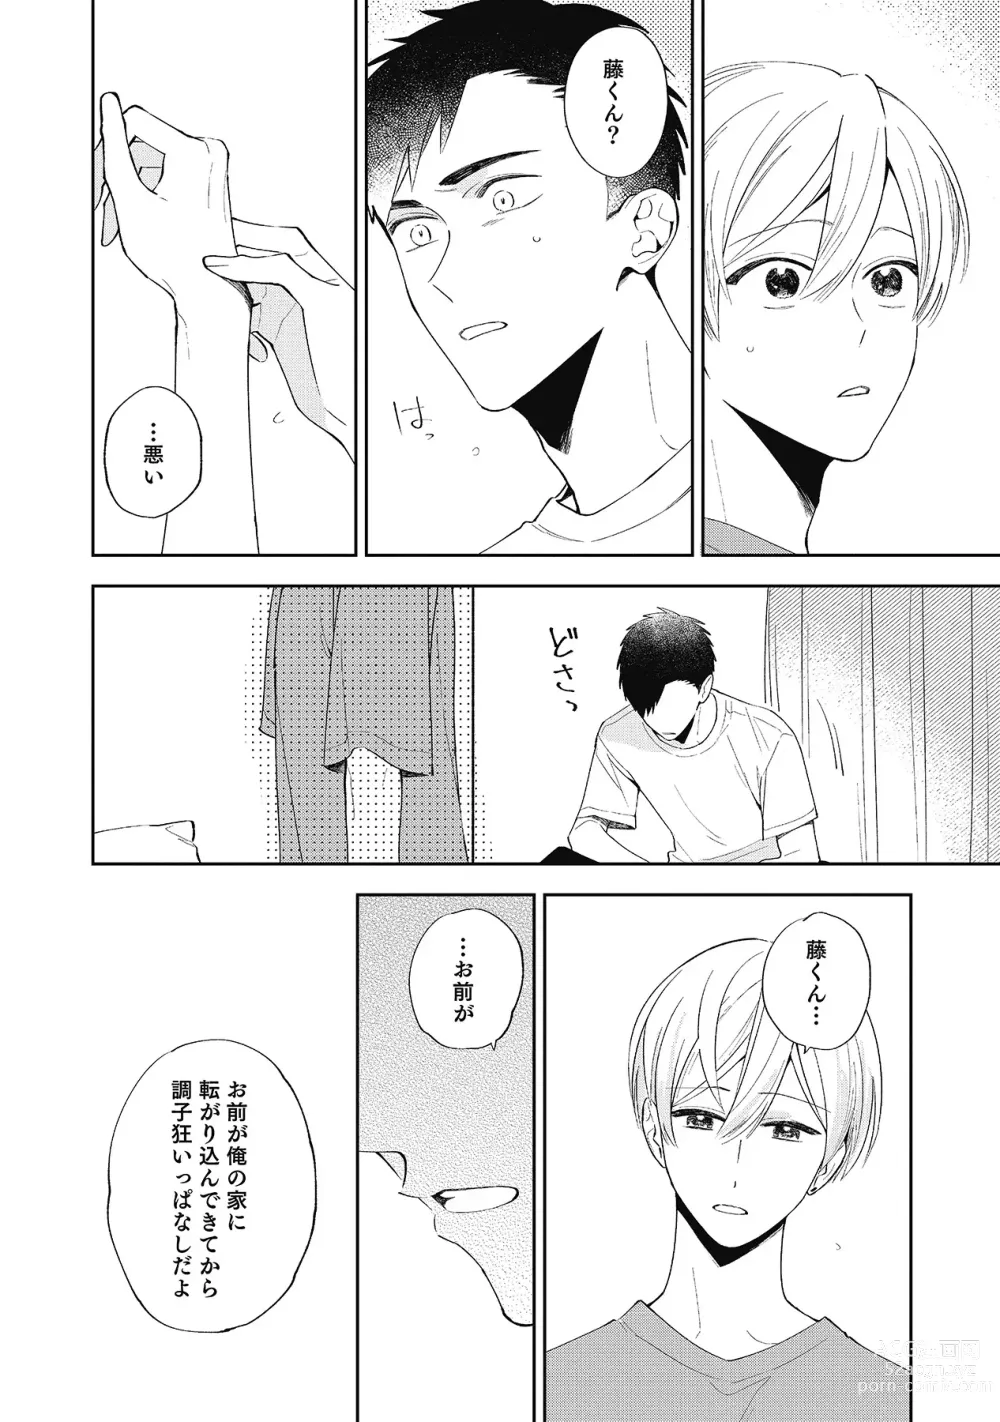 Page 150 of manga Sentimental Darling